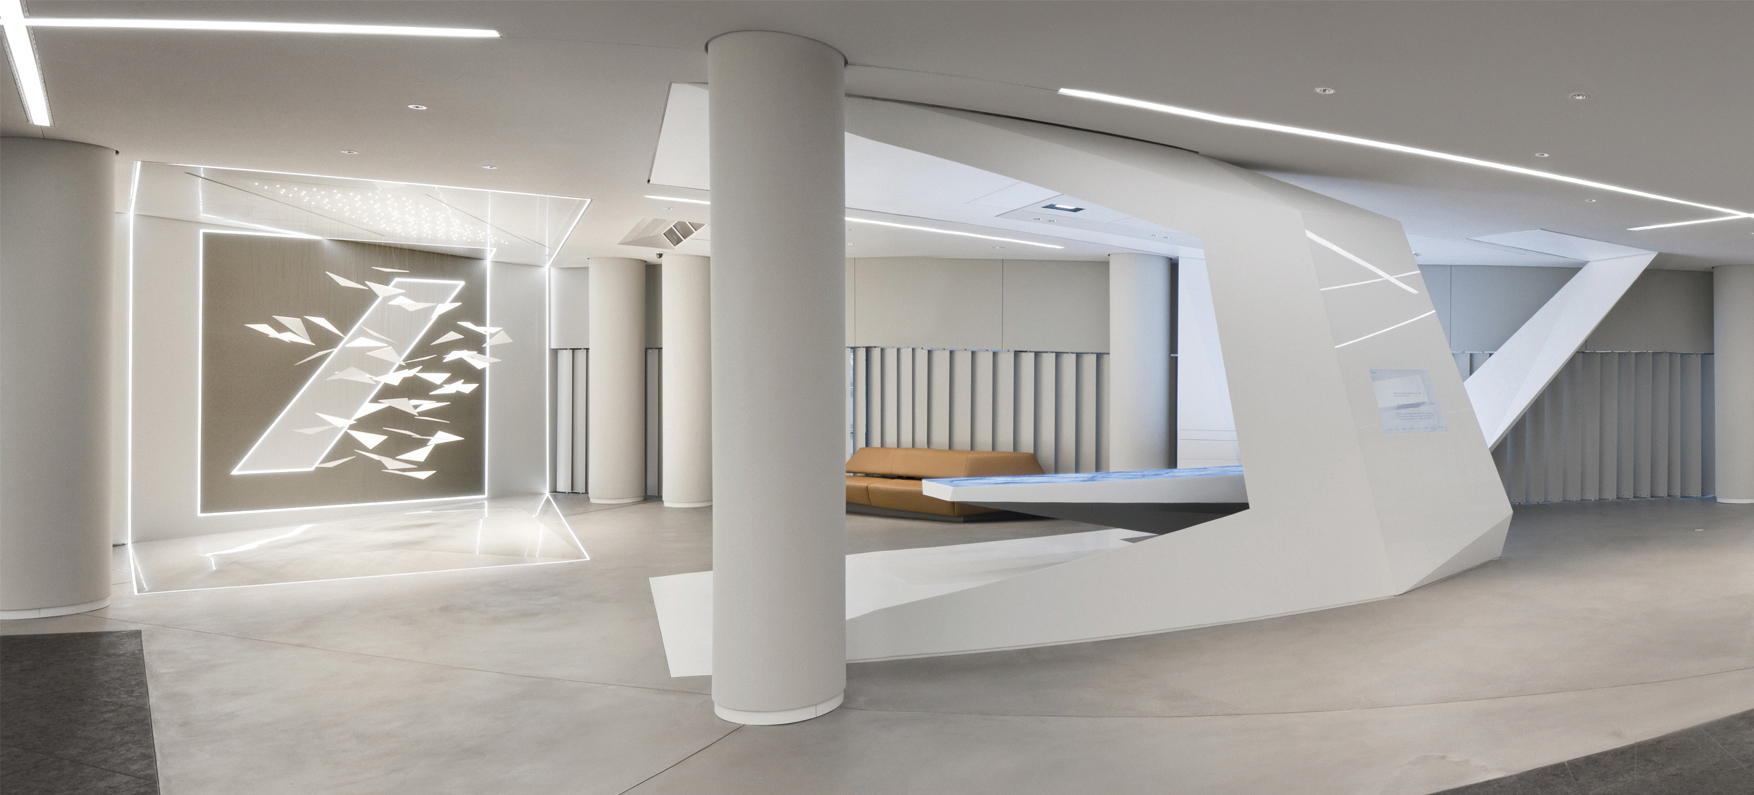 deutsche-bank-brand-space_coorporate-interior-design_coordination-berlin_01.jpg